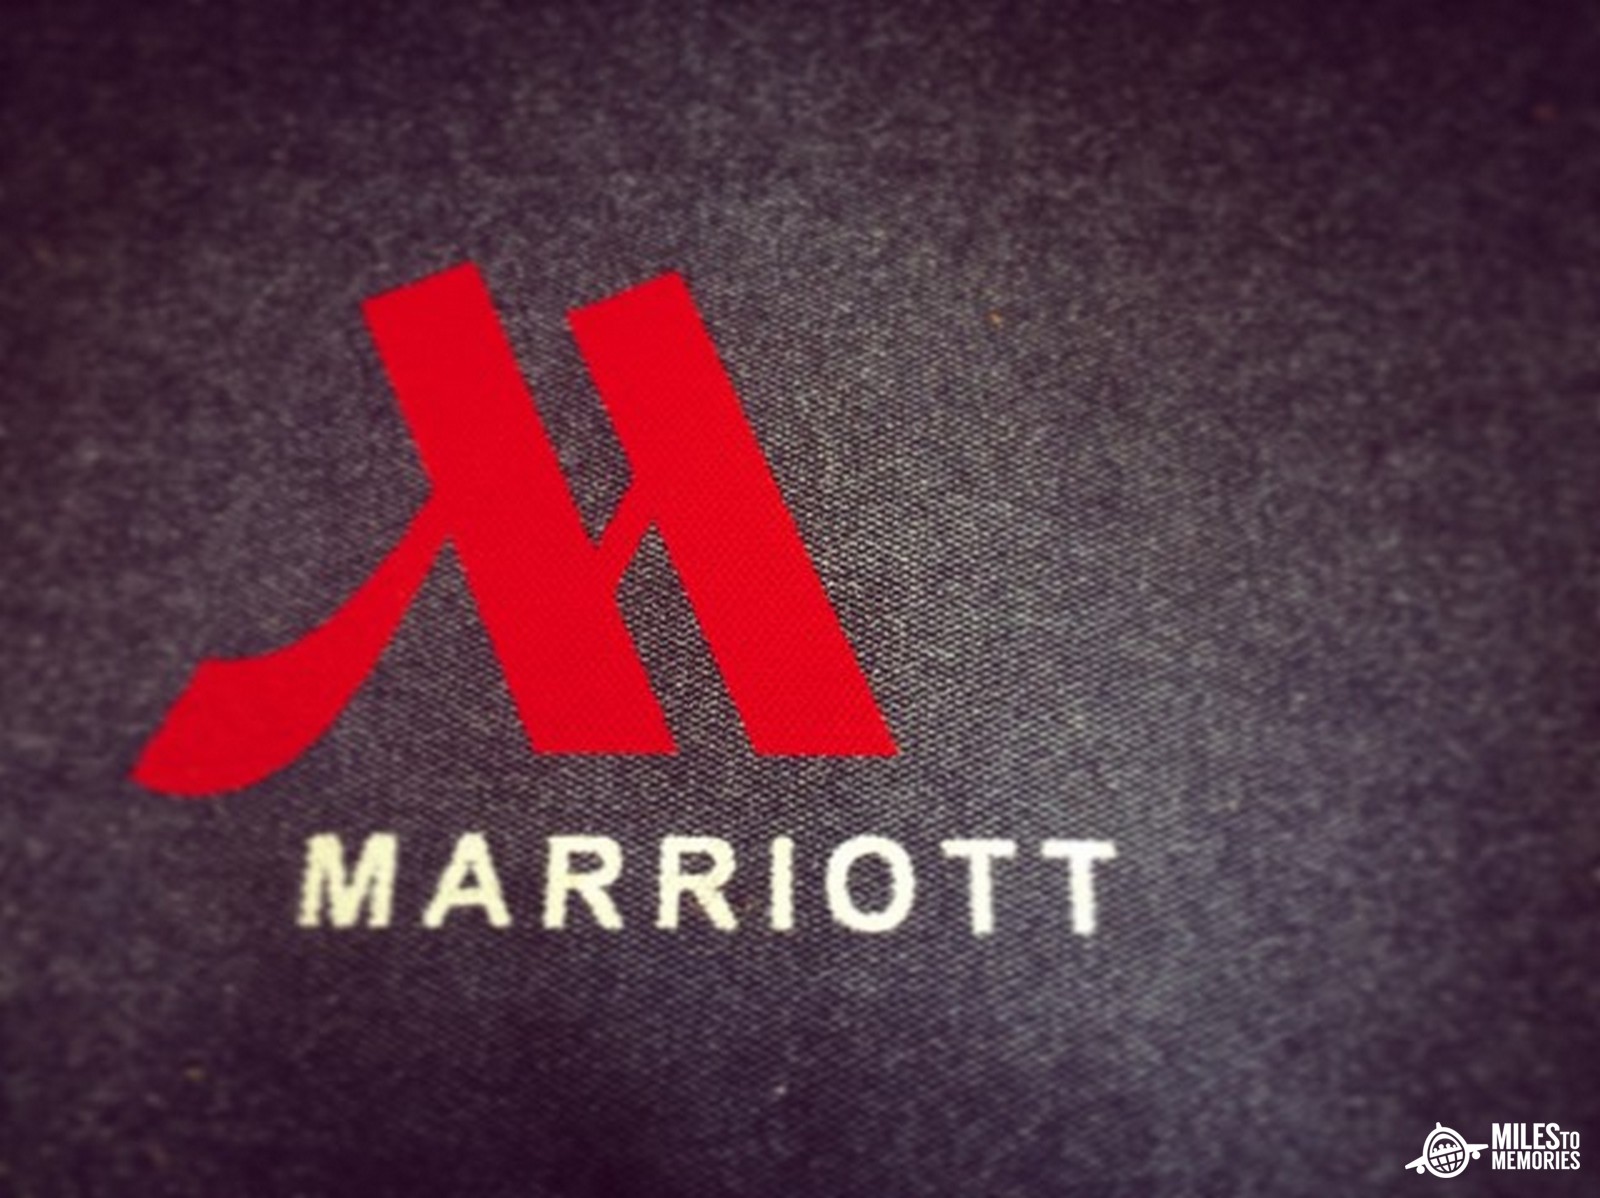 Marriott Bonvoy Brilliant Amex